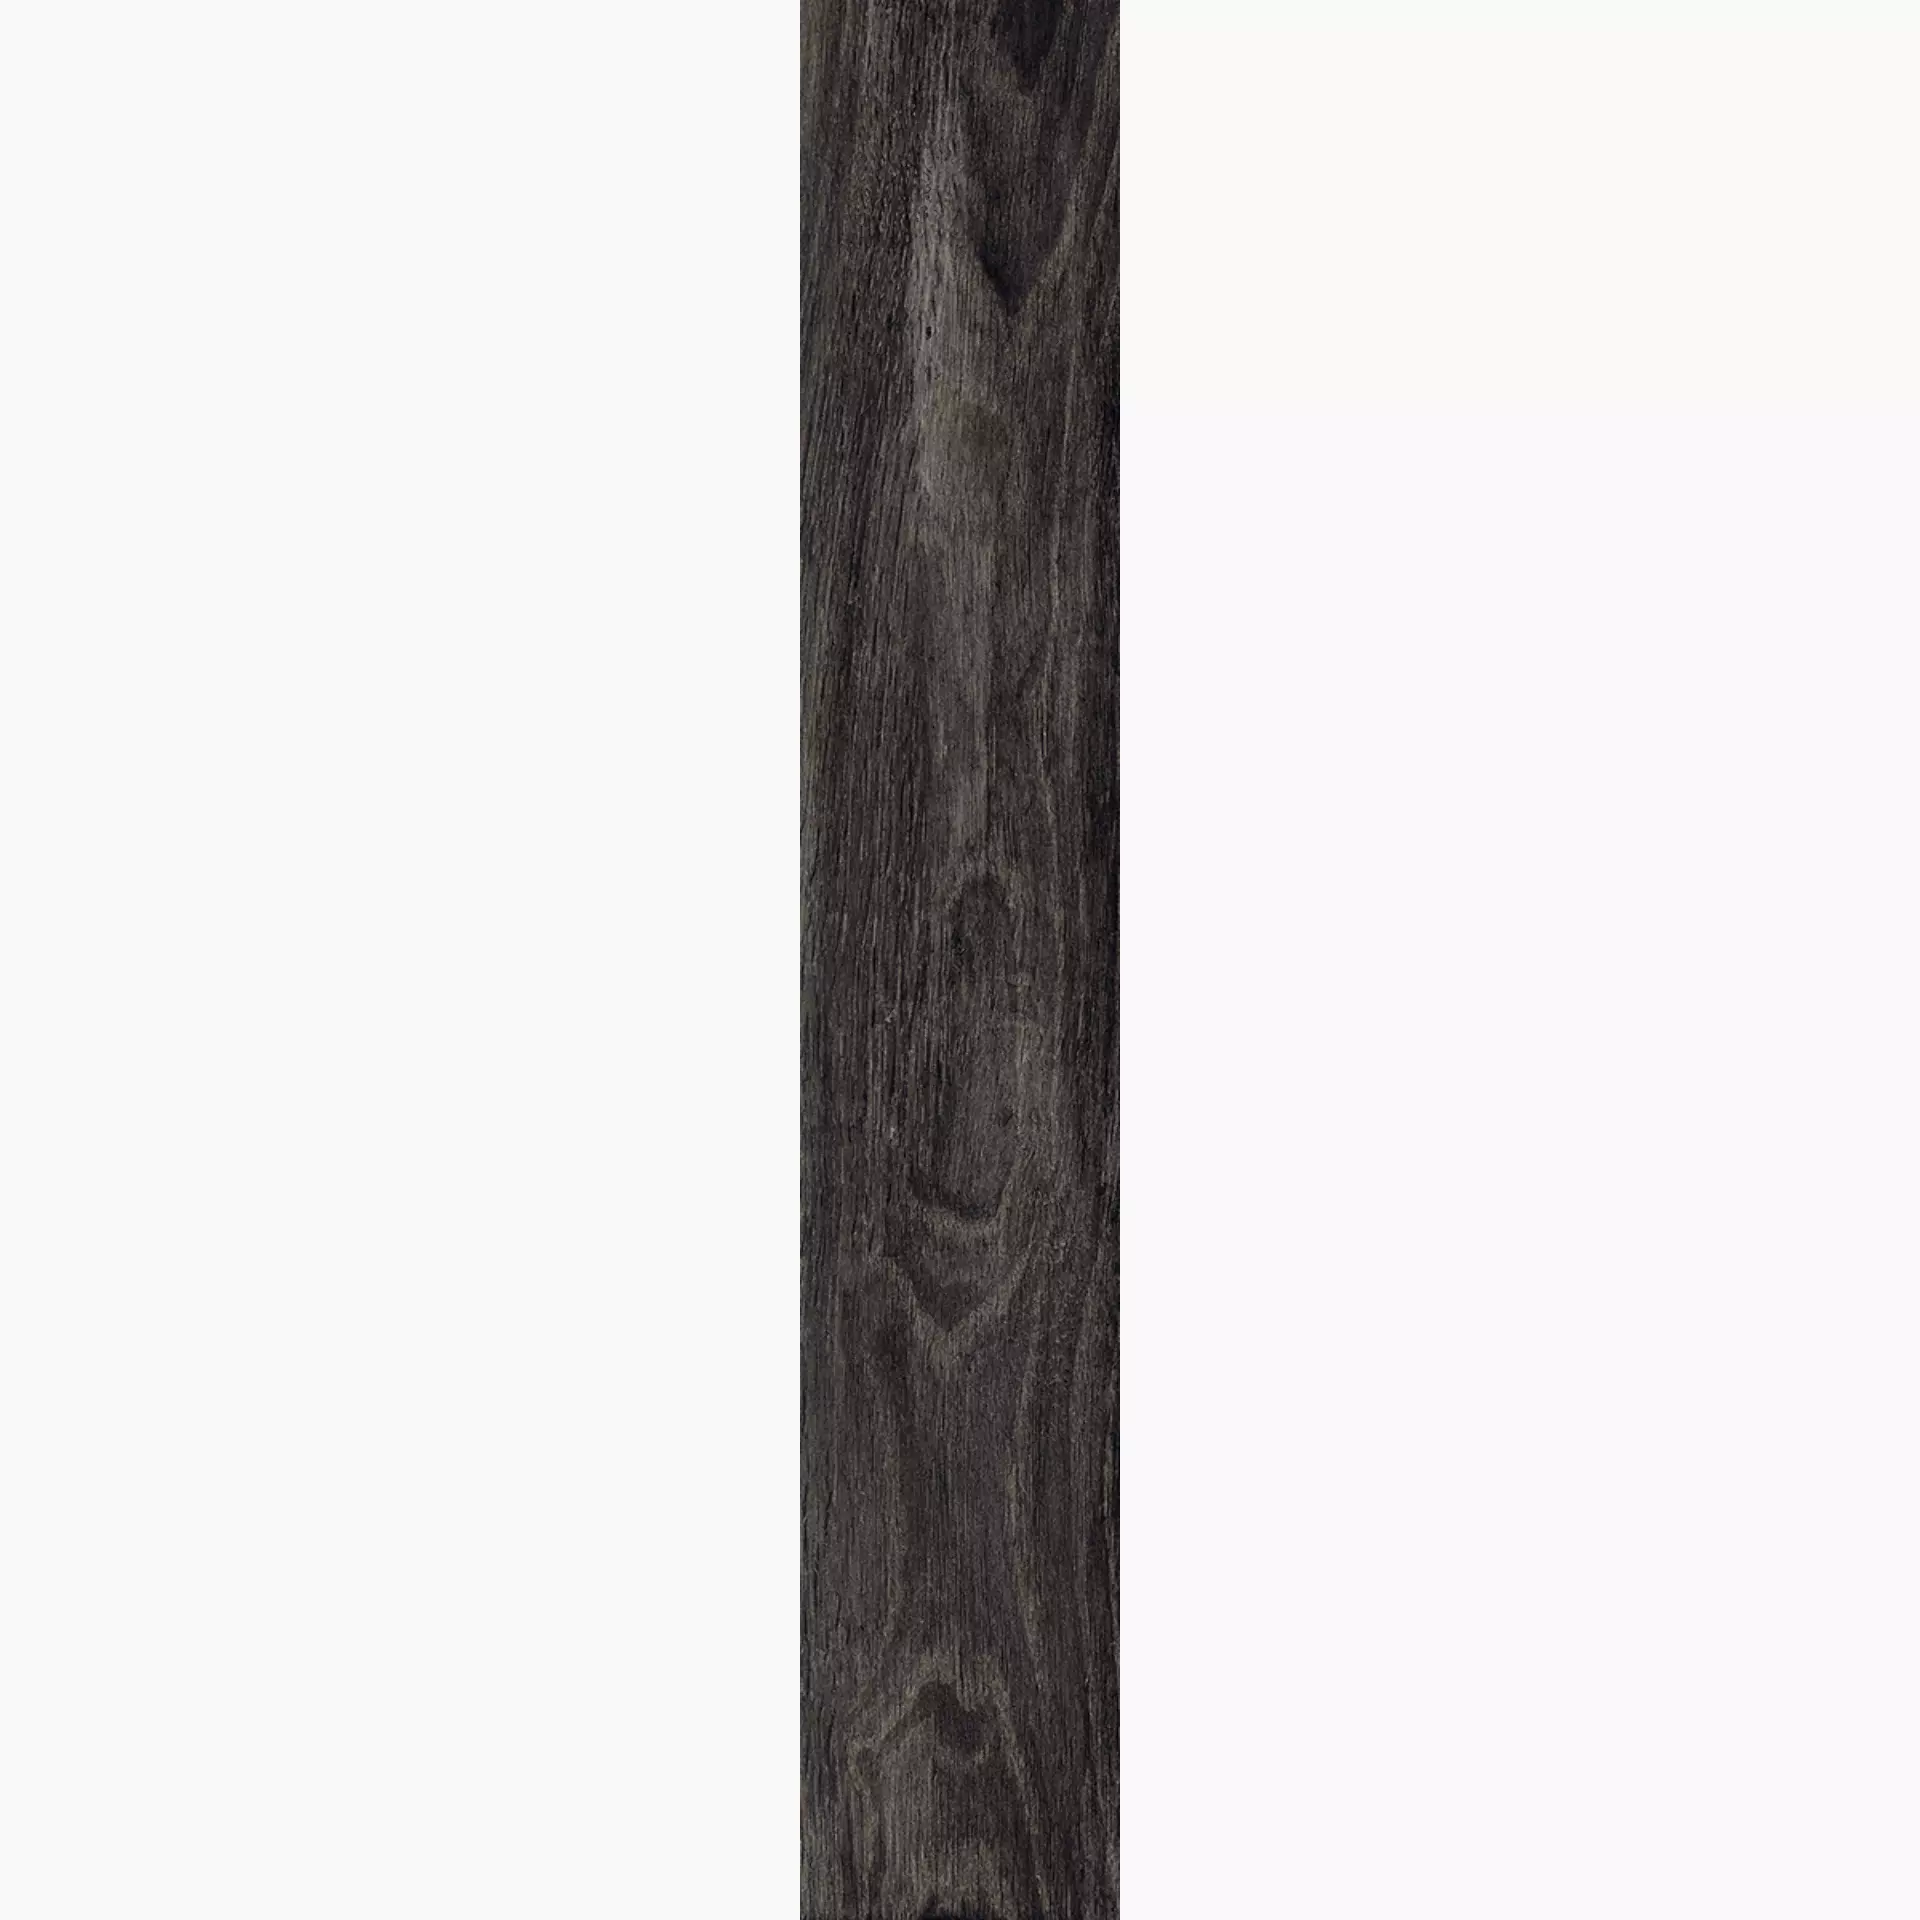 Rondine Greenwood Nero Naturale J86334 7,5x45cm 9,5mm